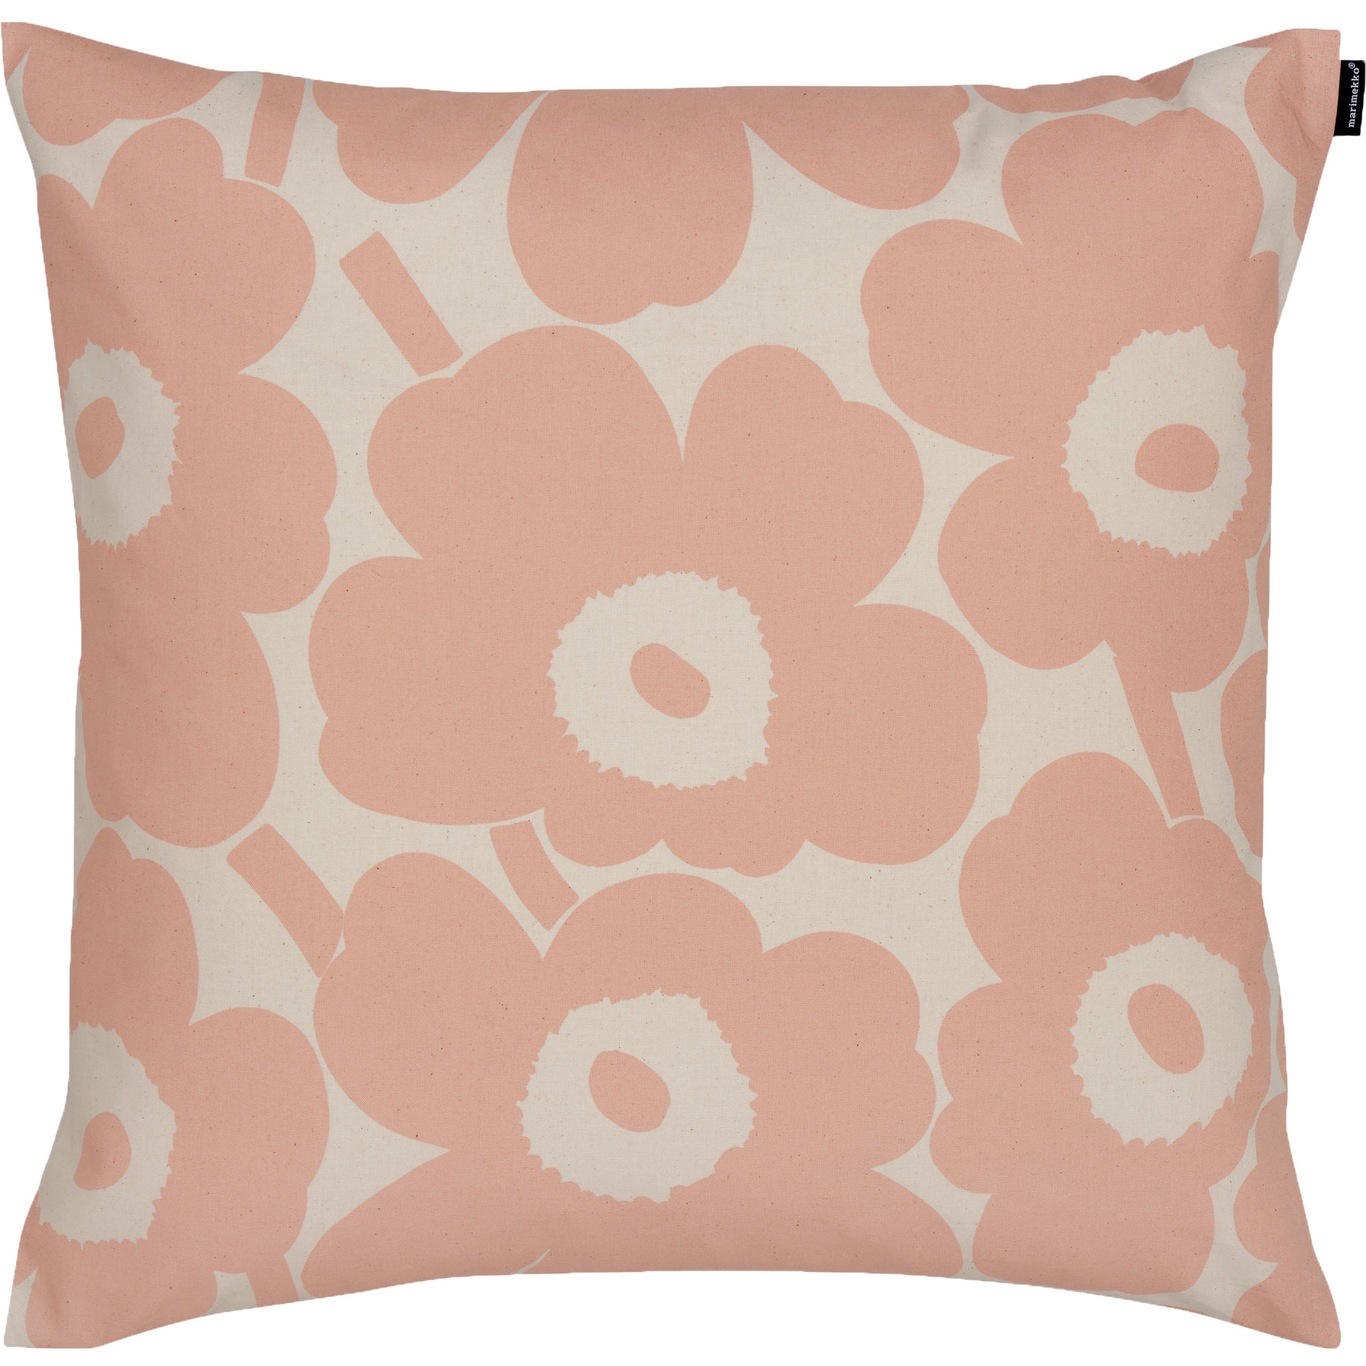 Pieni Unikko Cushion Cover 50x50 cm, Cotton / Peach